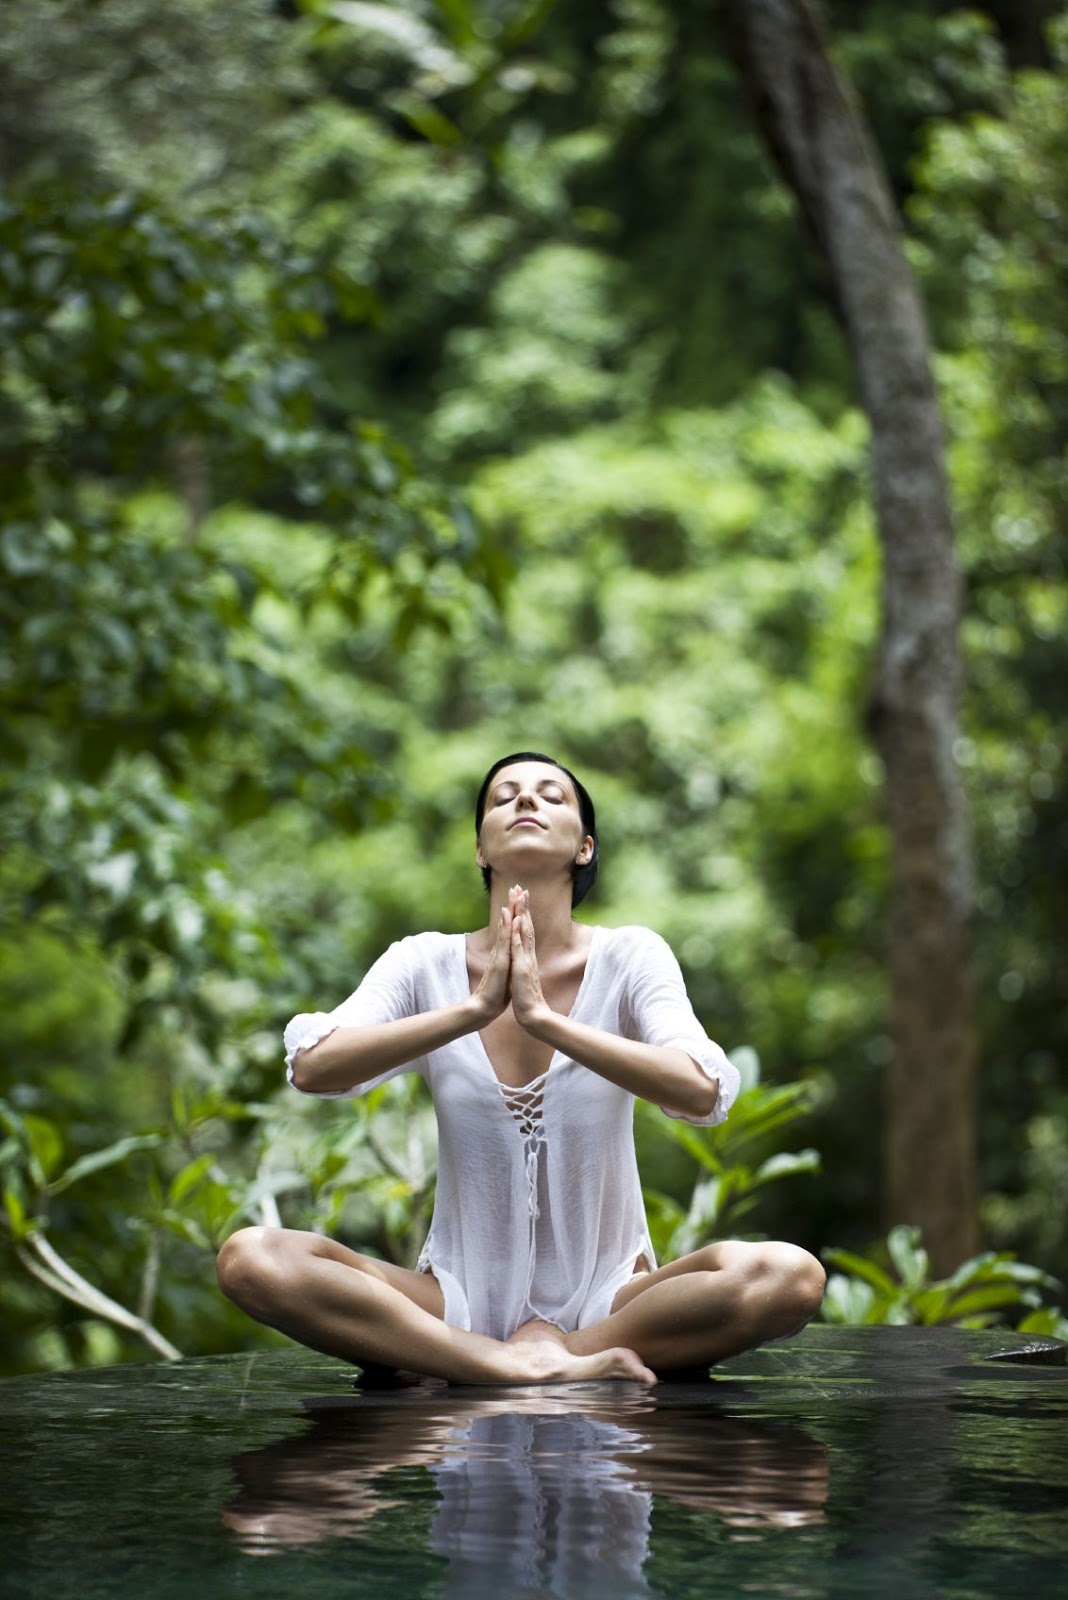 Медитация голосом женщины. Шива пранаяма. Йога на природе. Медитирует на природе. Девушка медитирует.